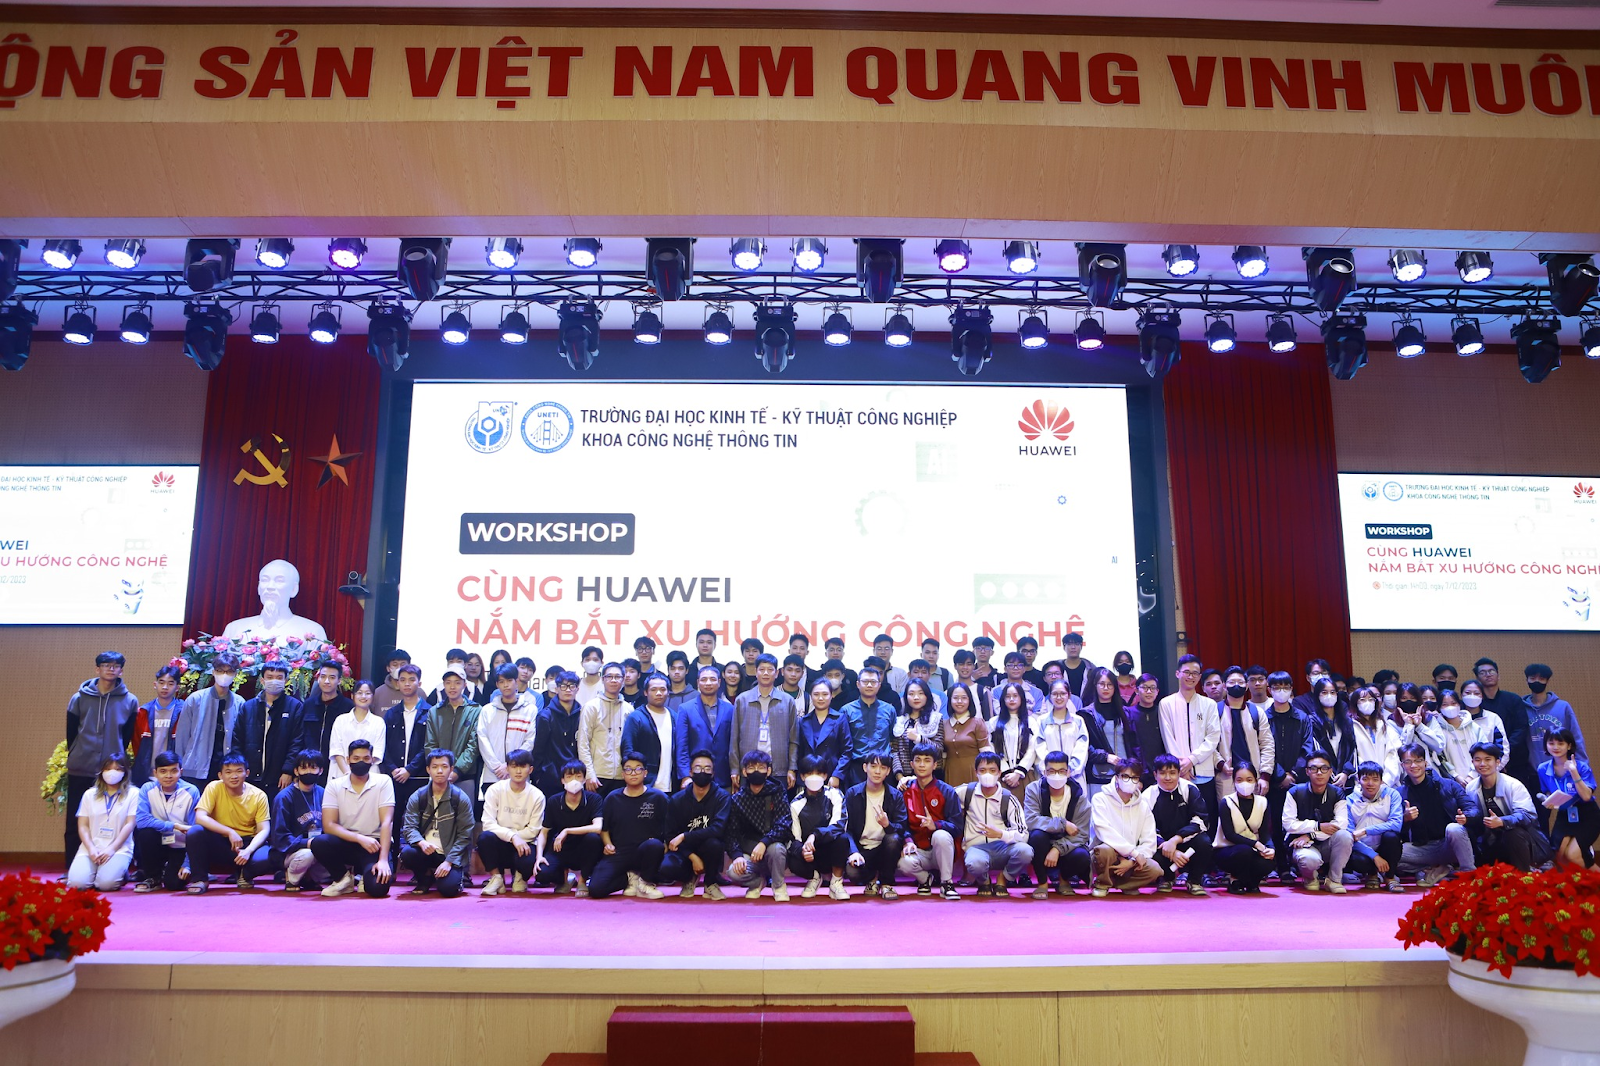 Huawei vinh danh 6 sinh viên chiến thắng cuộc thi ICT Competition Vietnam 2023 - 2024 - BPjCxDjoykkvfF1dF63ogo 8hCw5MAl9 U3eH6954z8oa715wAWTkf6D1oKpfandhBqijuiIB3c1UxLODcBODjEpcTj5kPiQSjiJslEvdY  zoAEh 1OhSrwTgocFuASZ6vc0sG dwoGE uLGYj4AQ